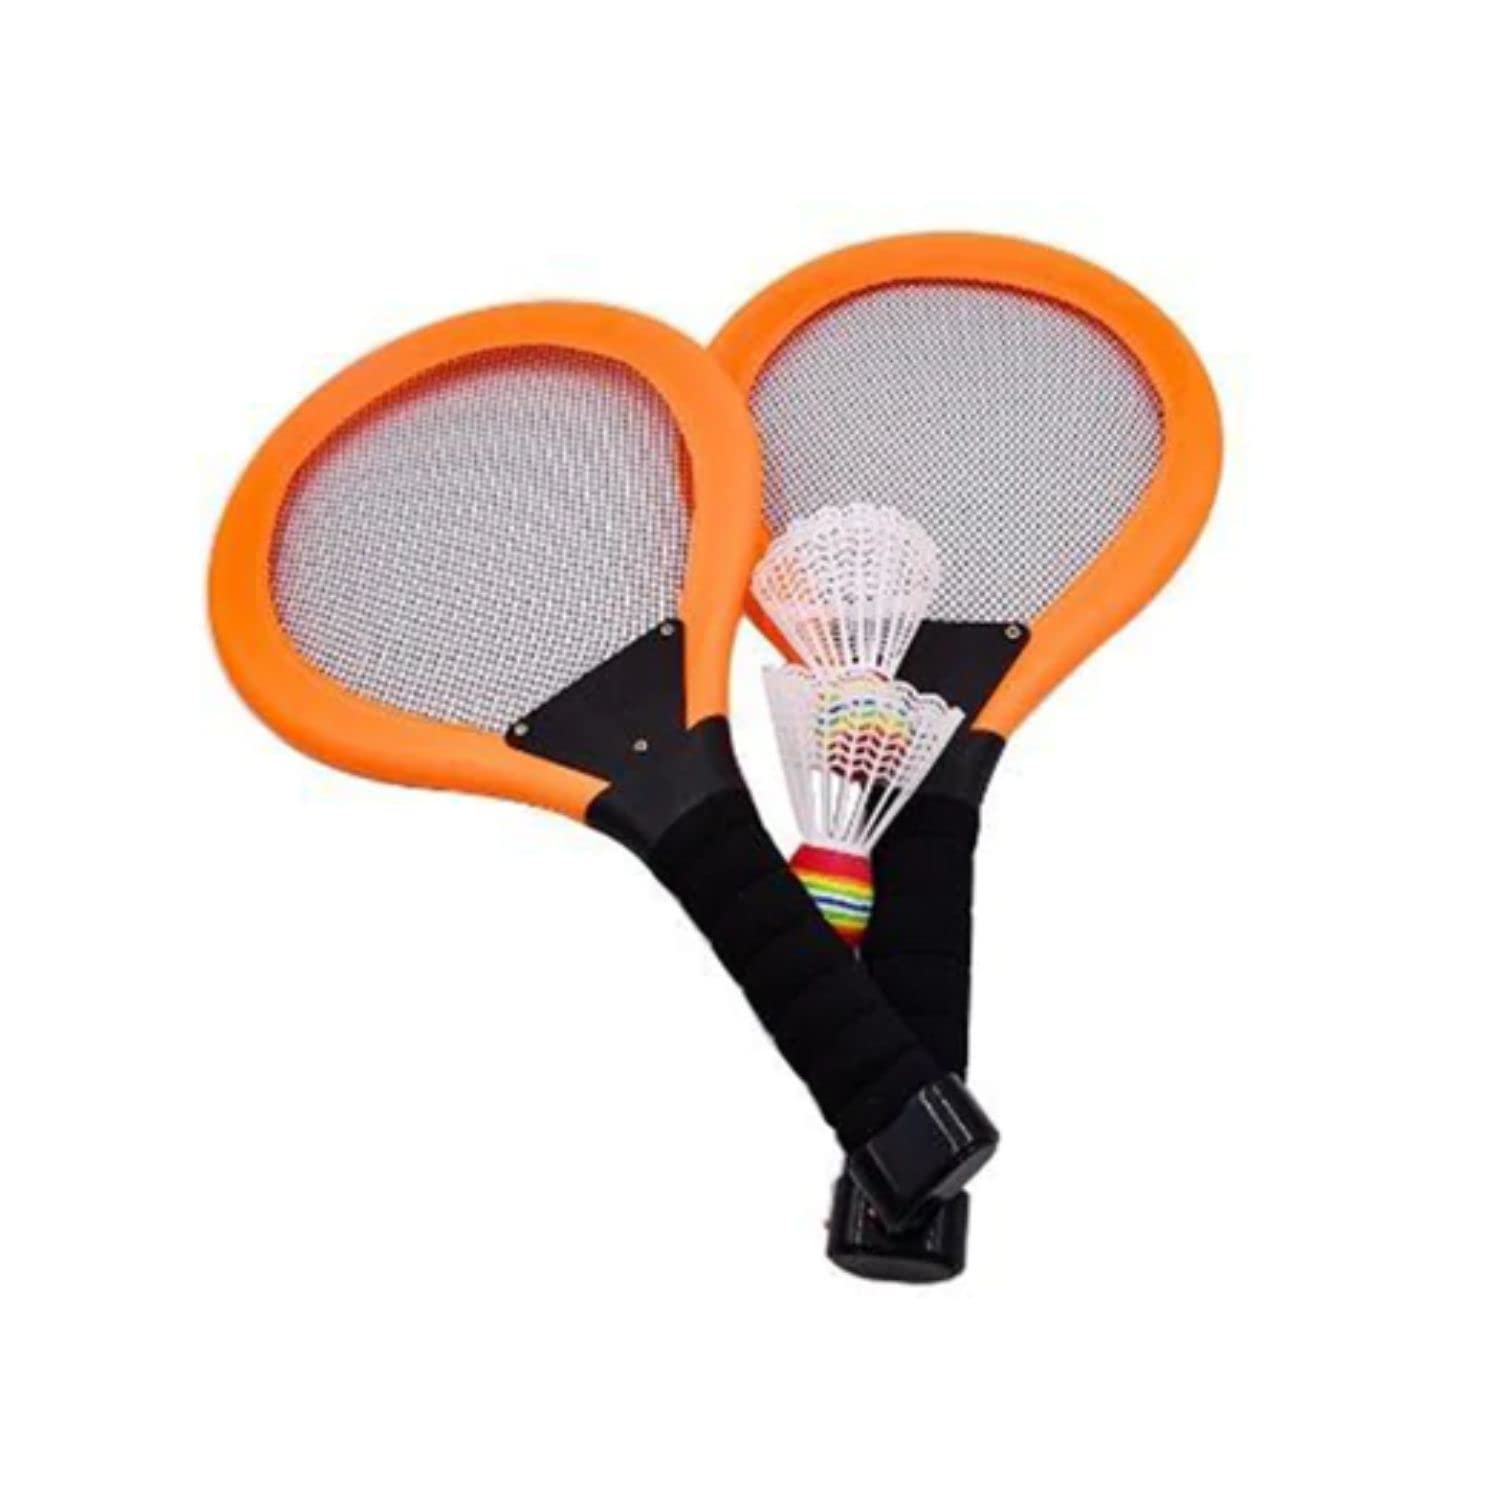 Kids Mandi LED Badminton Rackets with 2 Shuttlecock Night Glow.